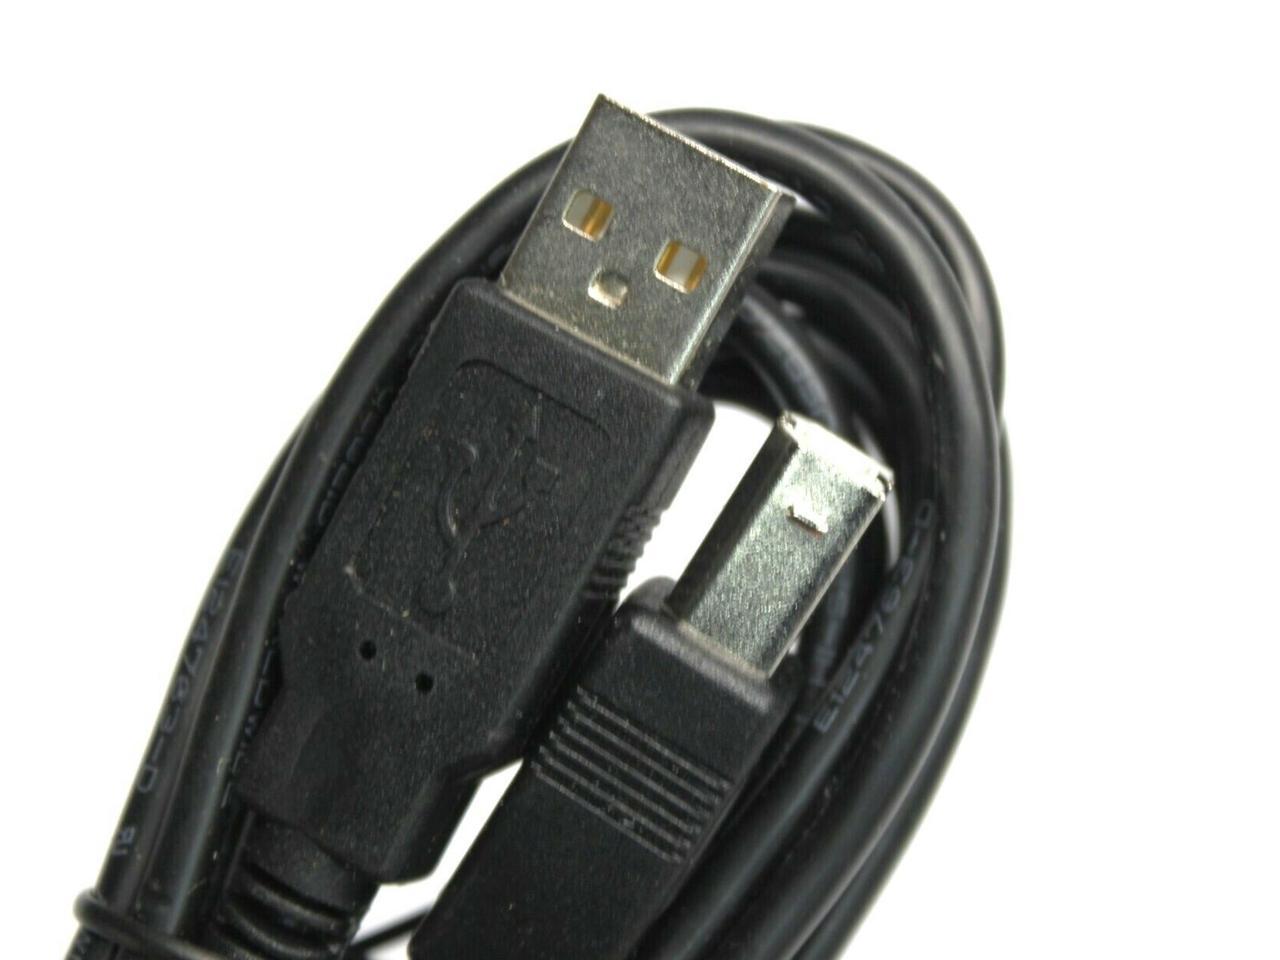 Cord USB Cable Replacement for HP Laserjet II IID IIP III IIID IIIP Printers 